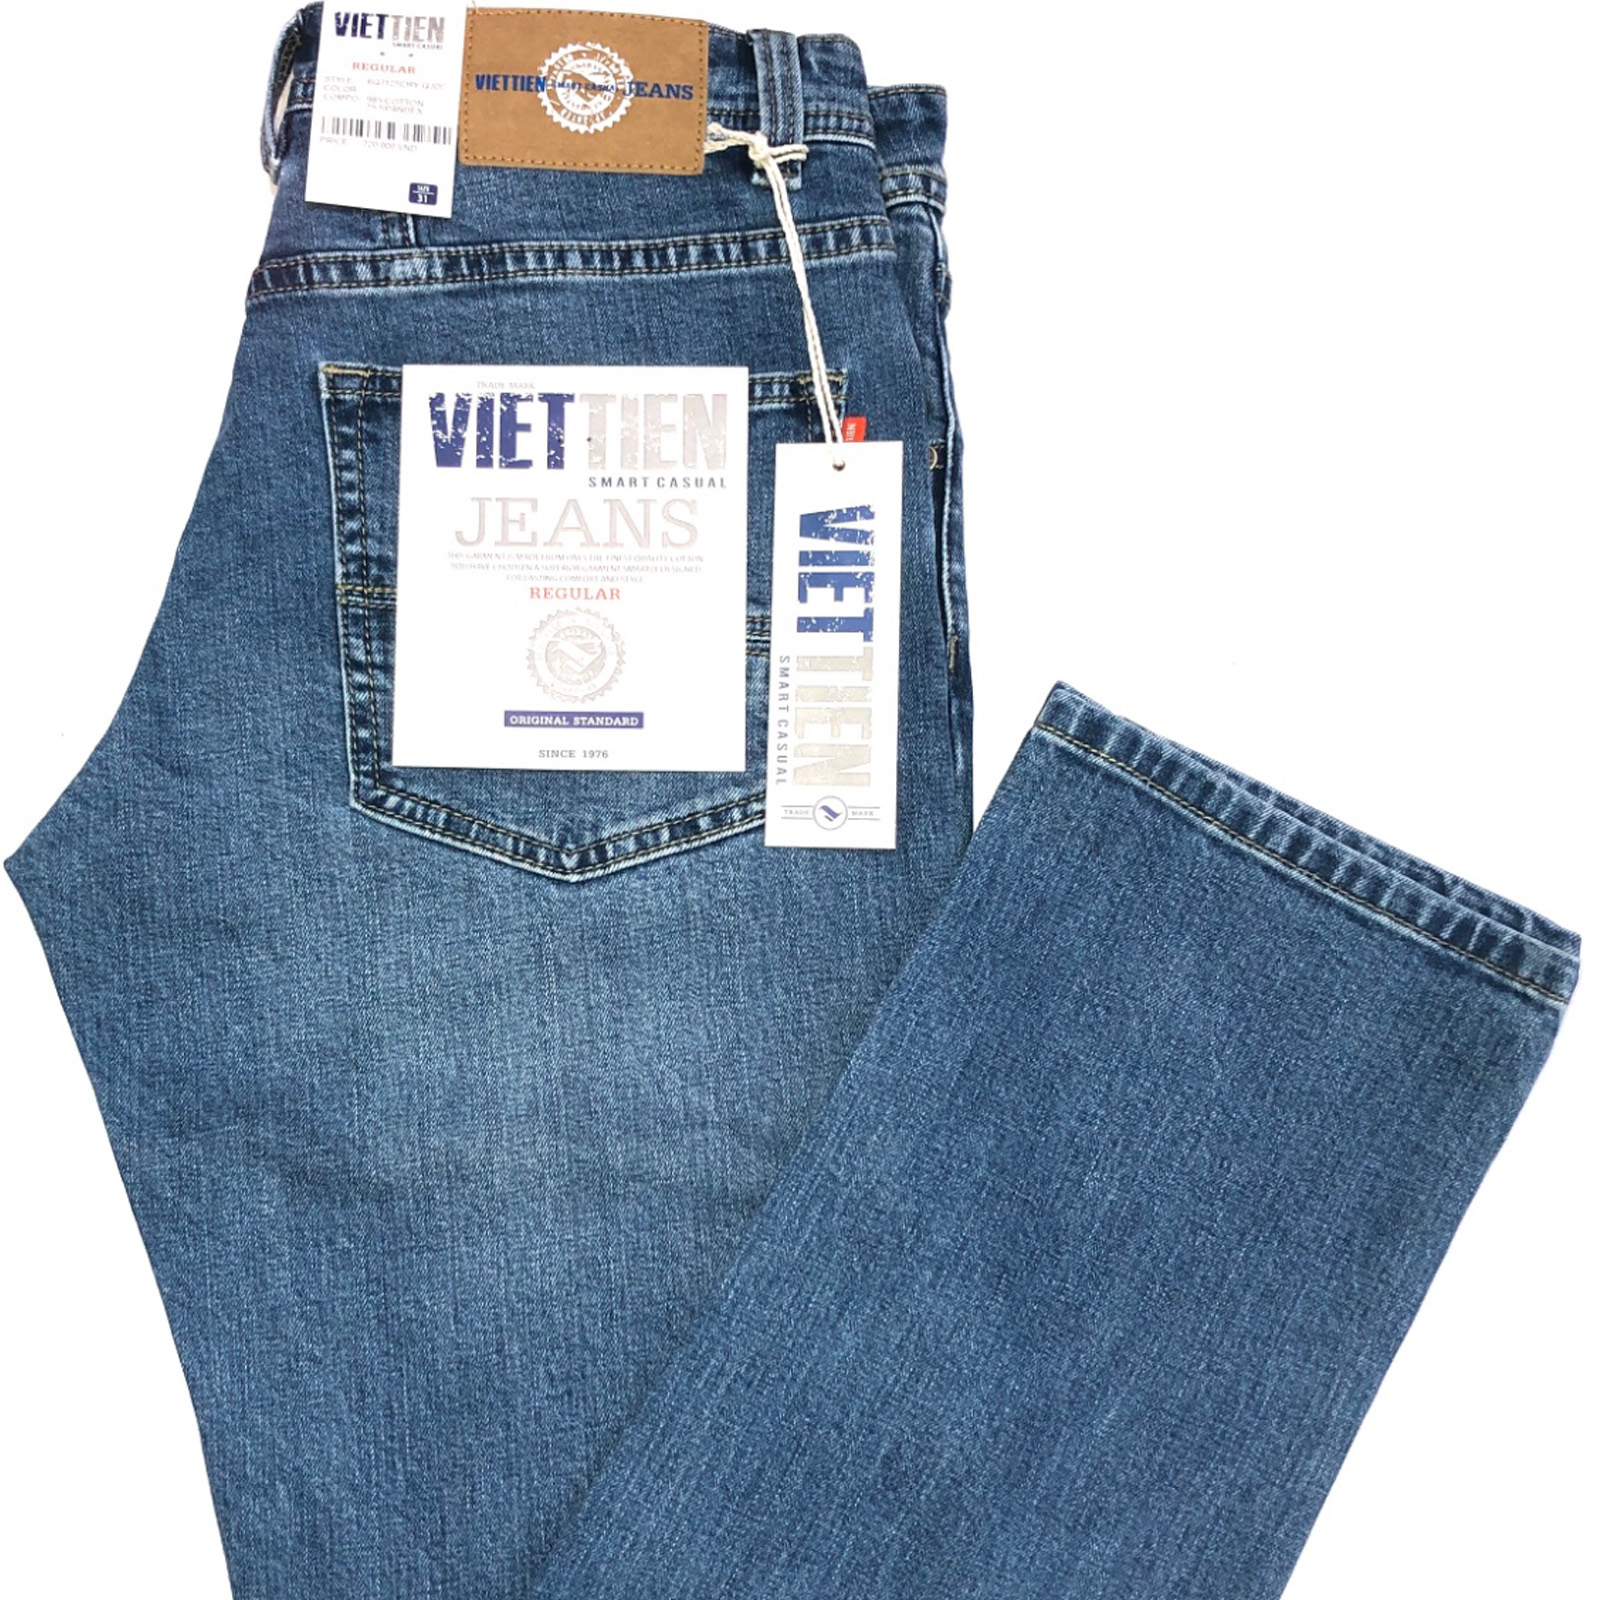 Viettien - Quần jeans nam smart casual regular fit 6Q7121